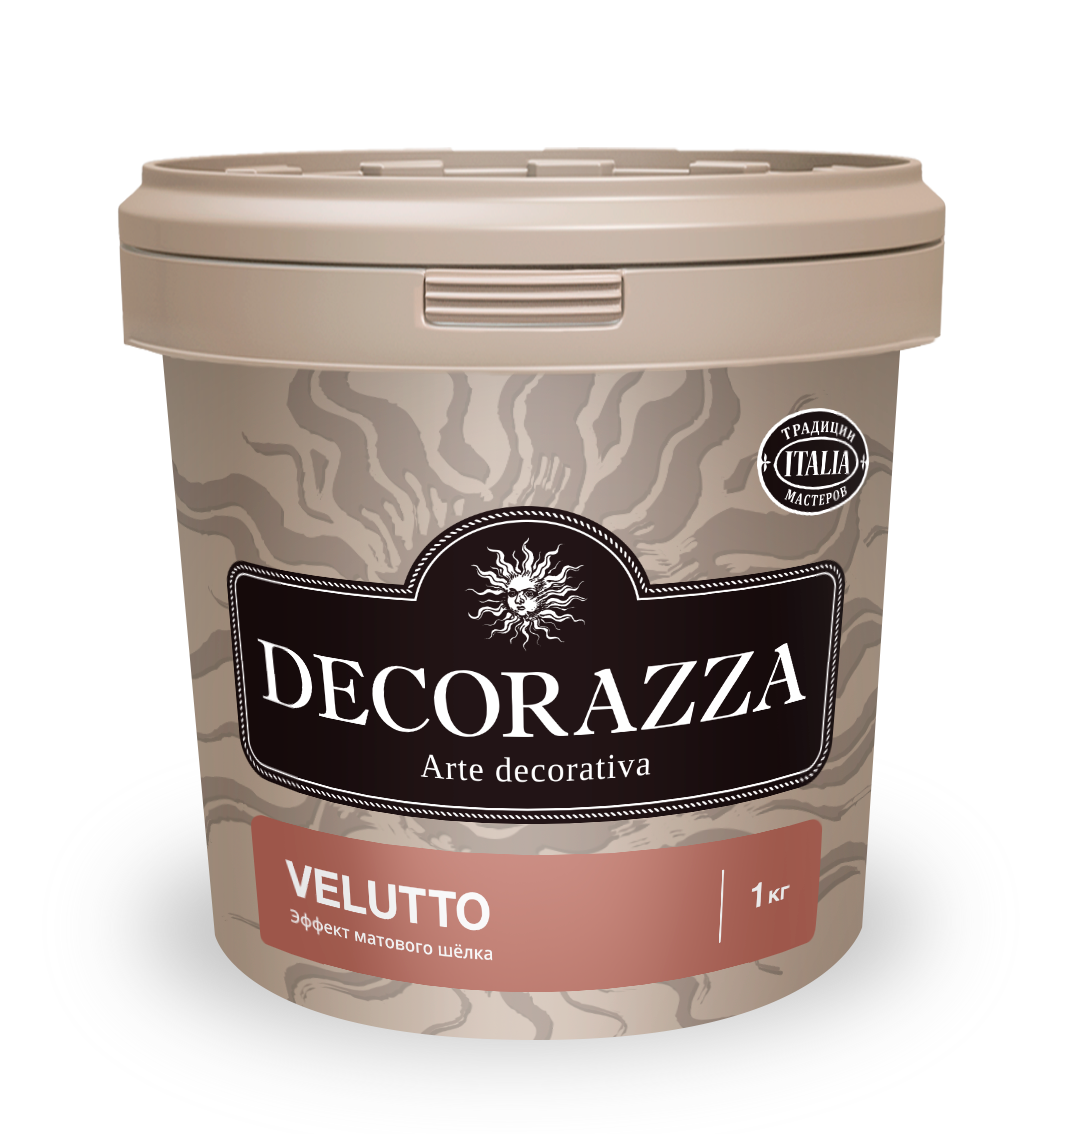 Декоративная штукатурка Decorazza Velluto VT 001, 1 кг декоративная штукатурка decorazza art beton ab 001 9 кг